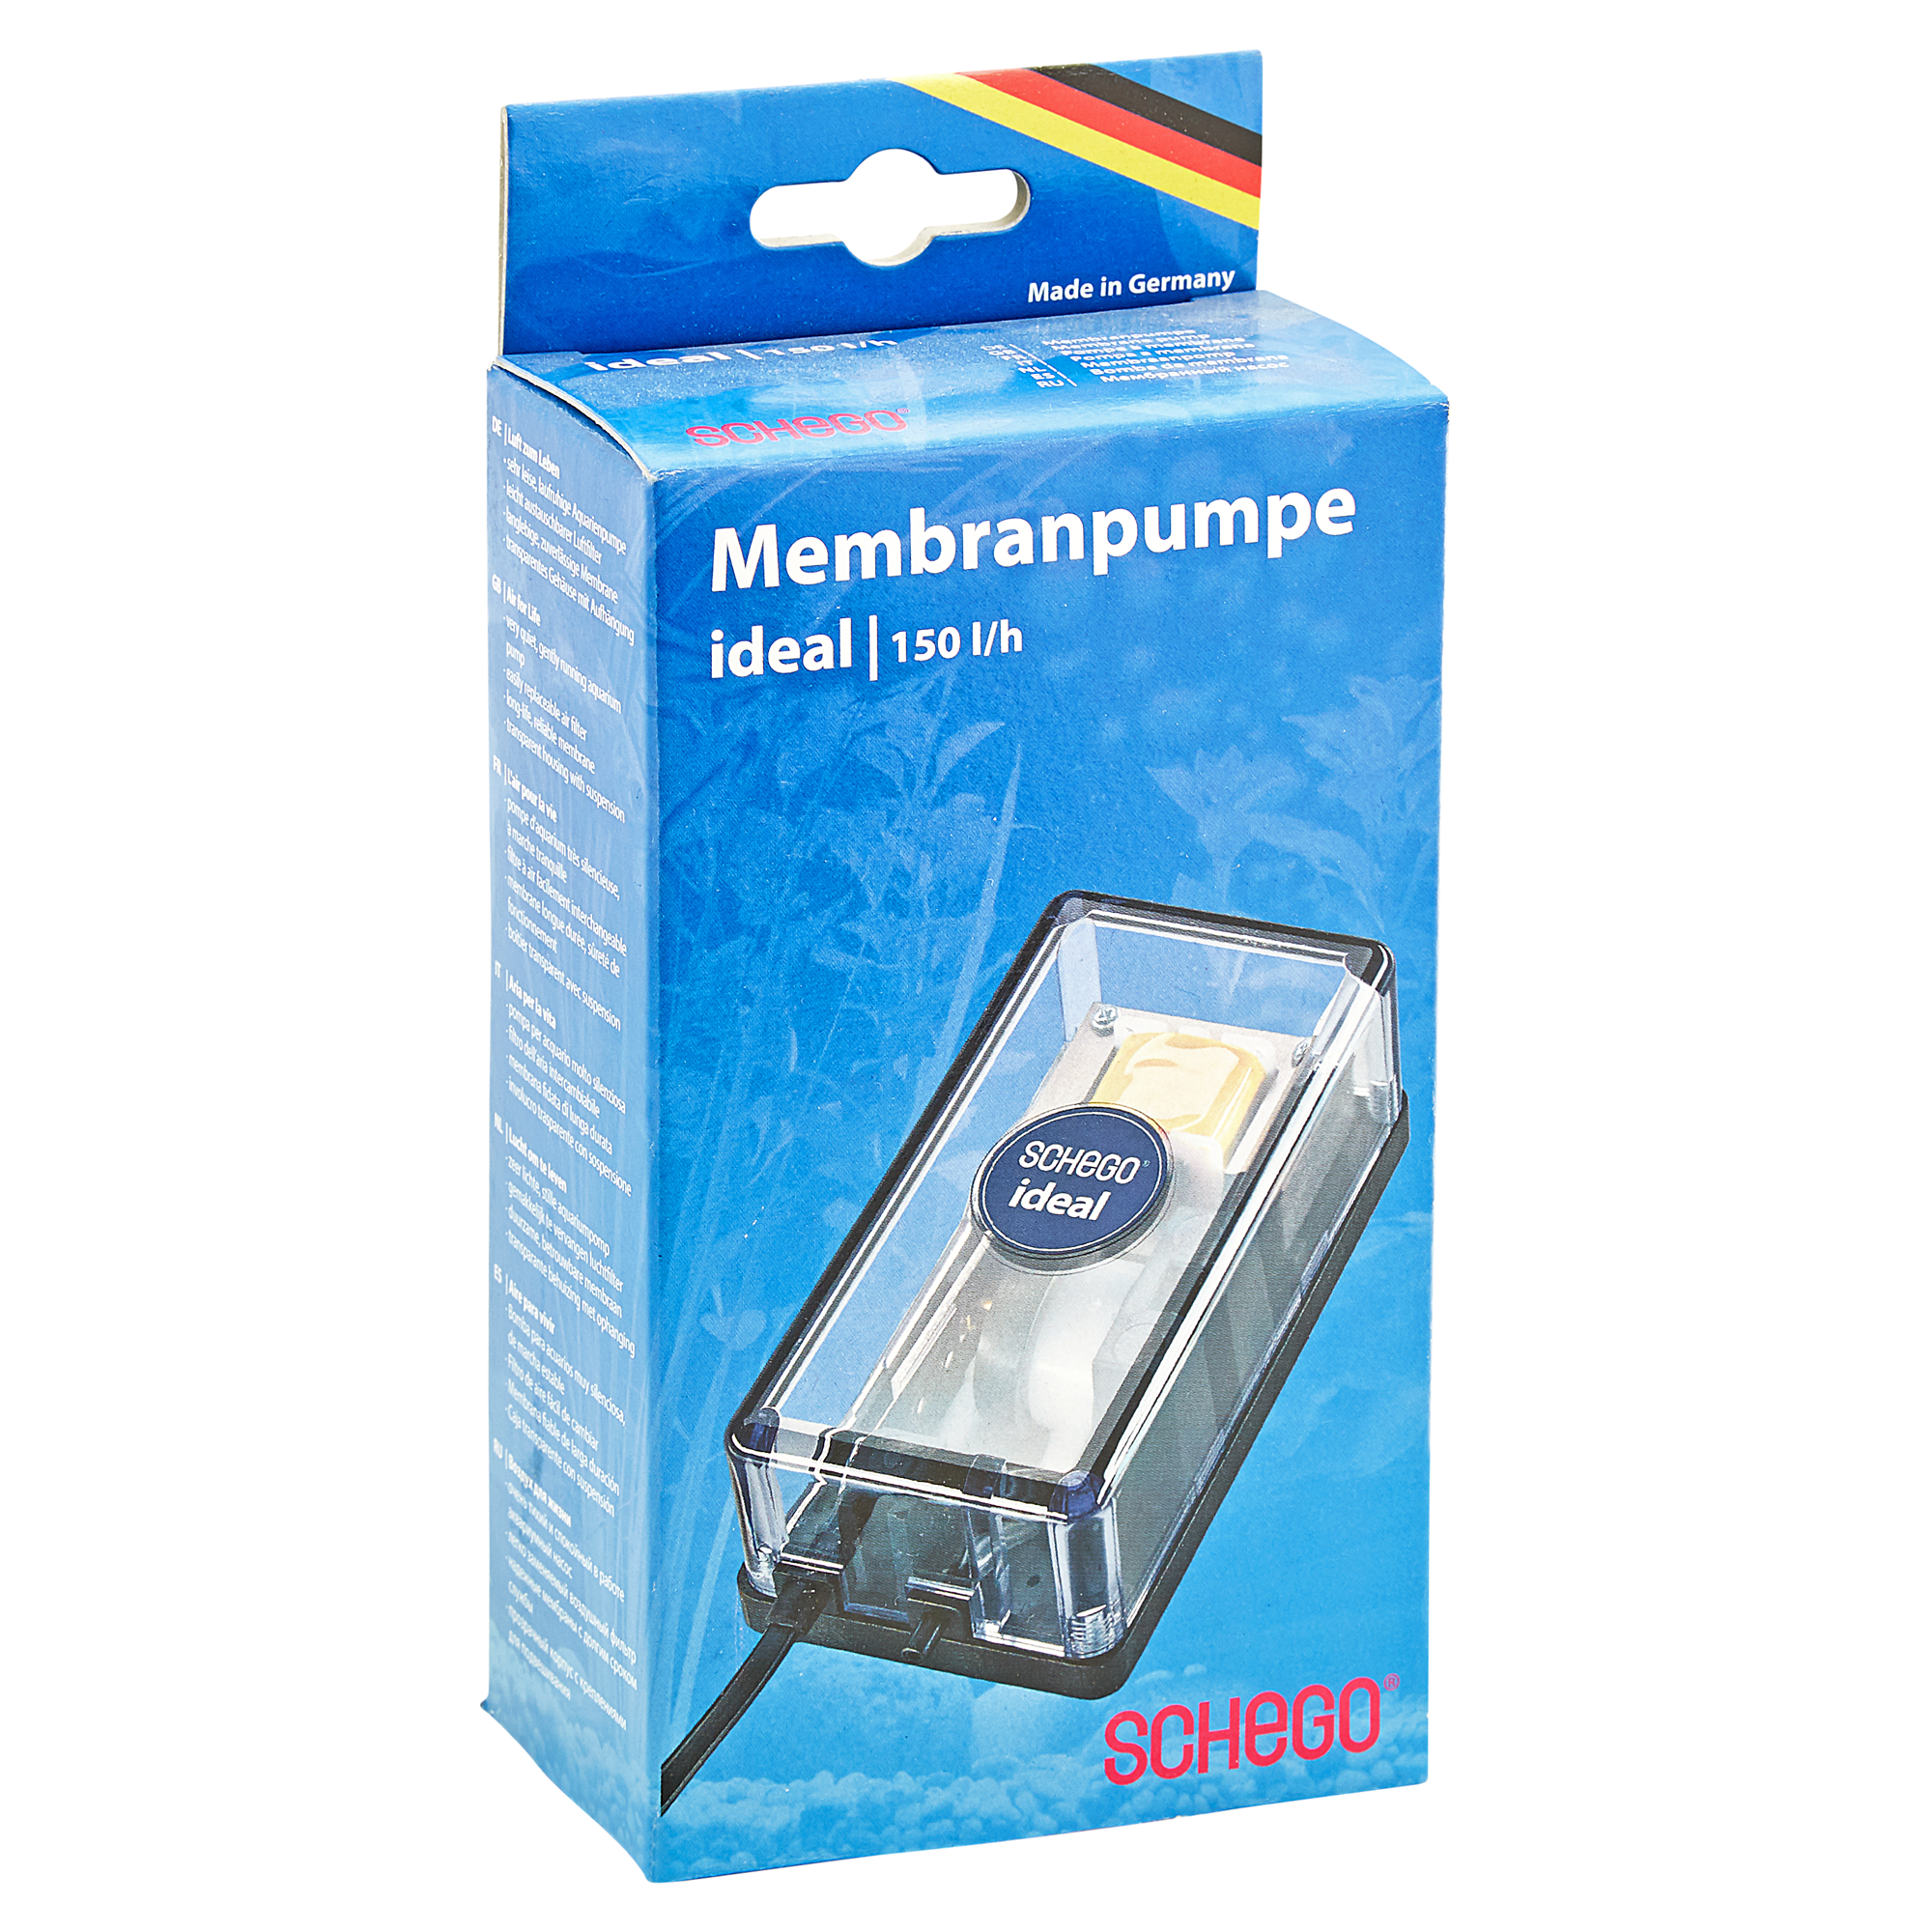 Membranpumpe ideal 150 l/h + product picture